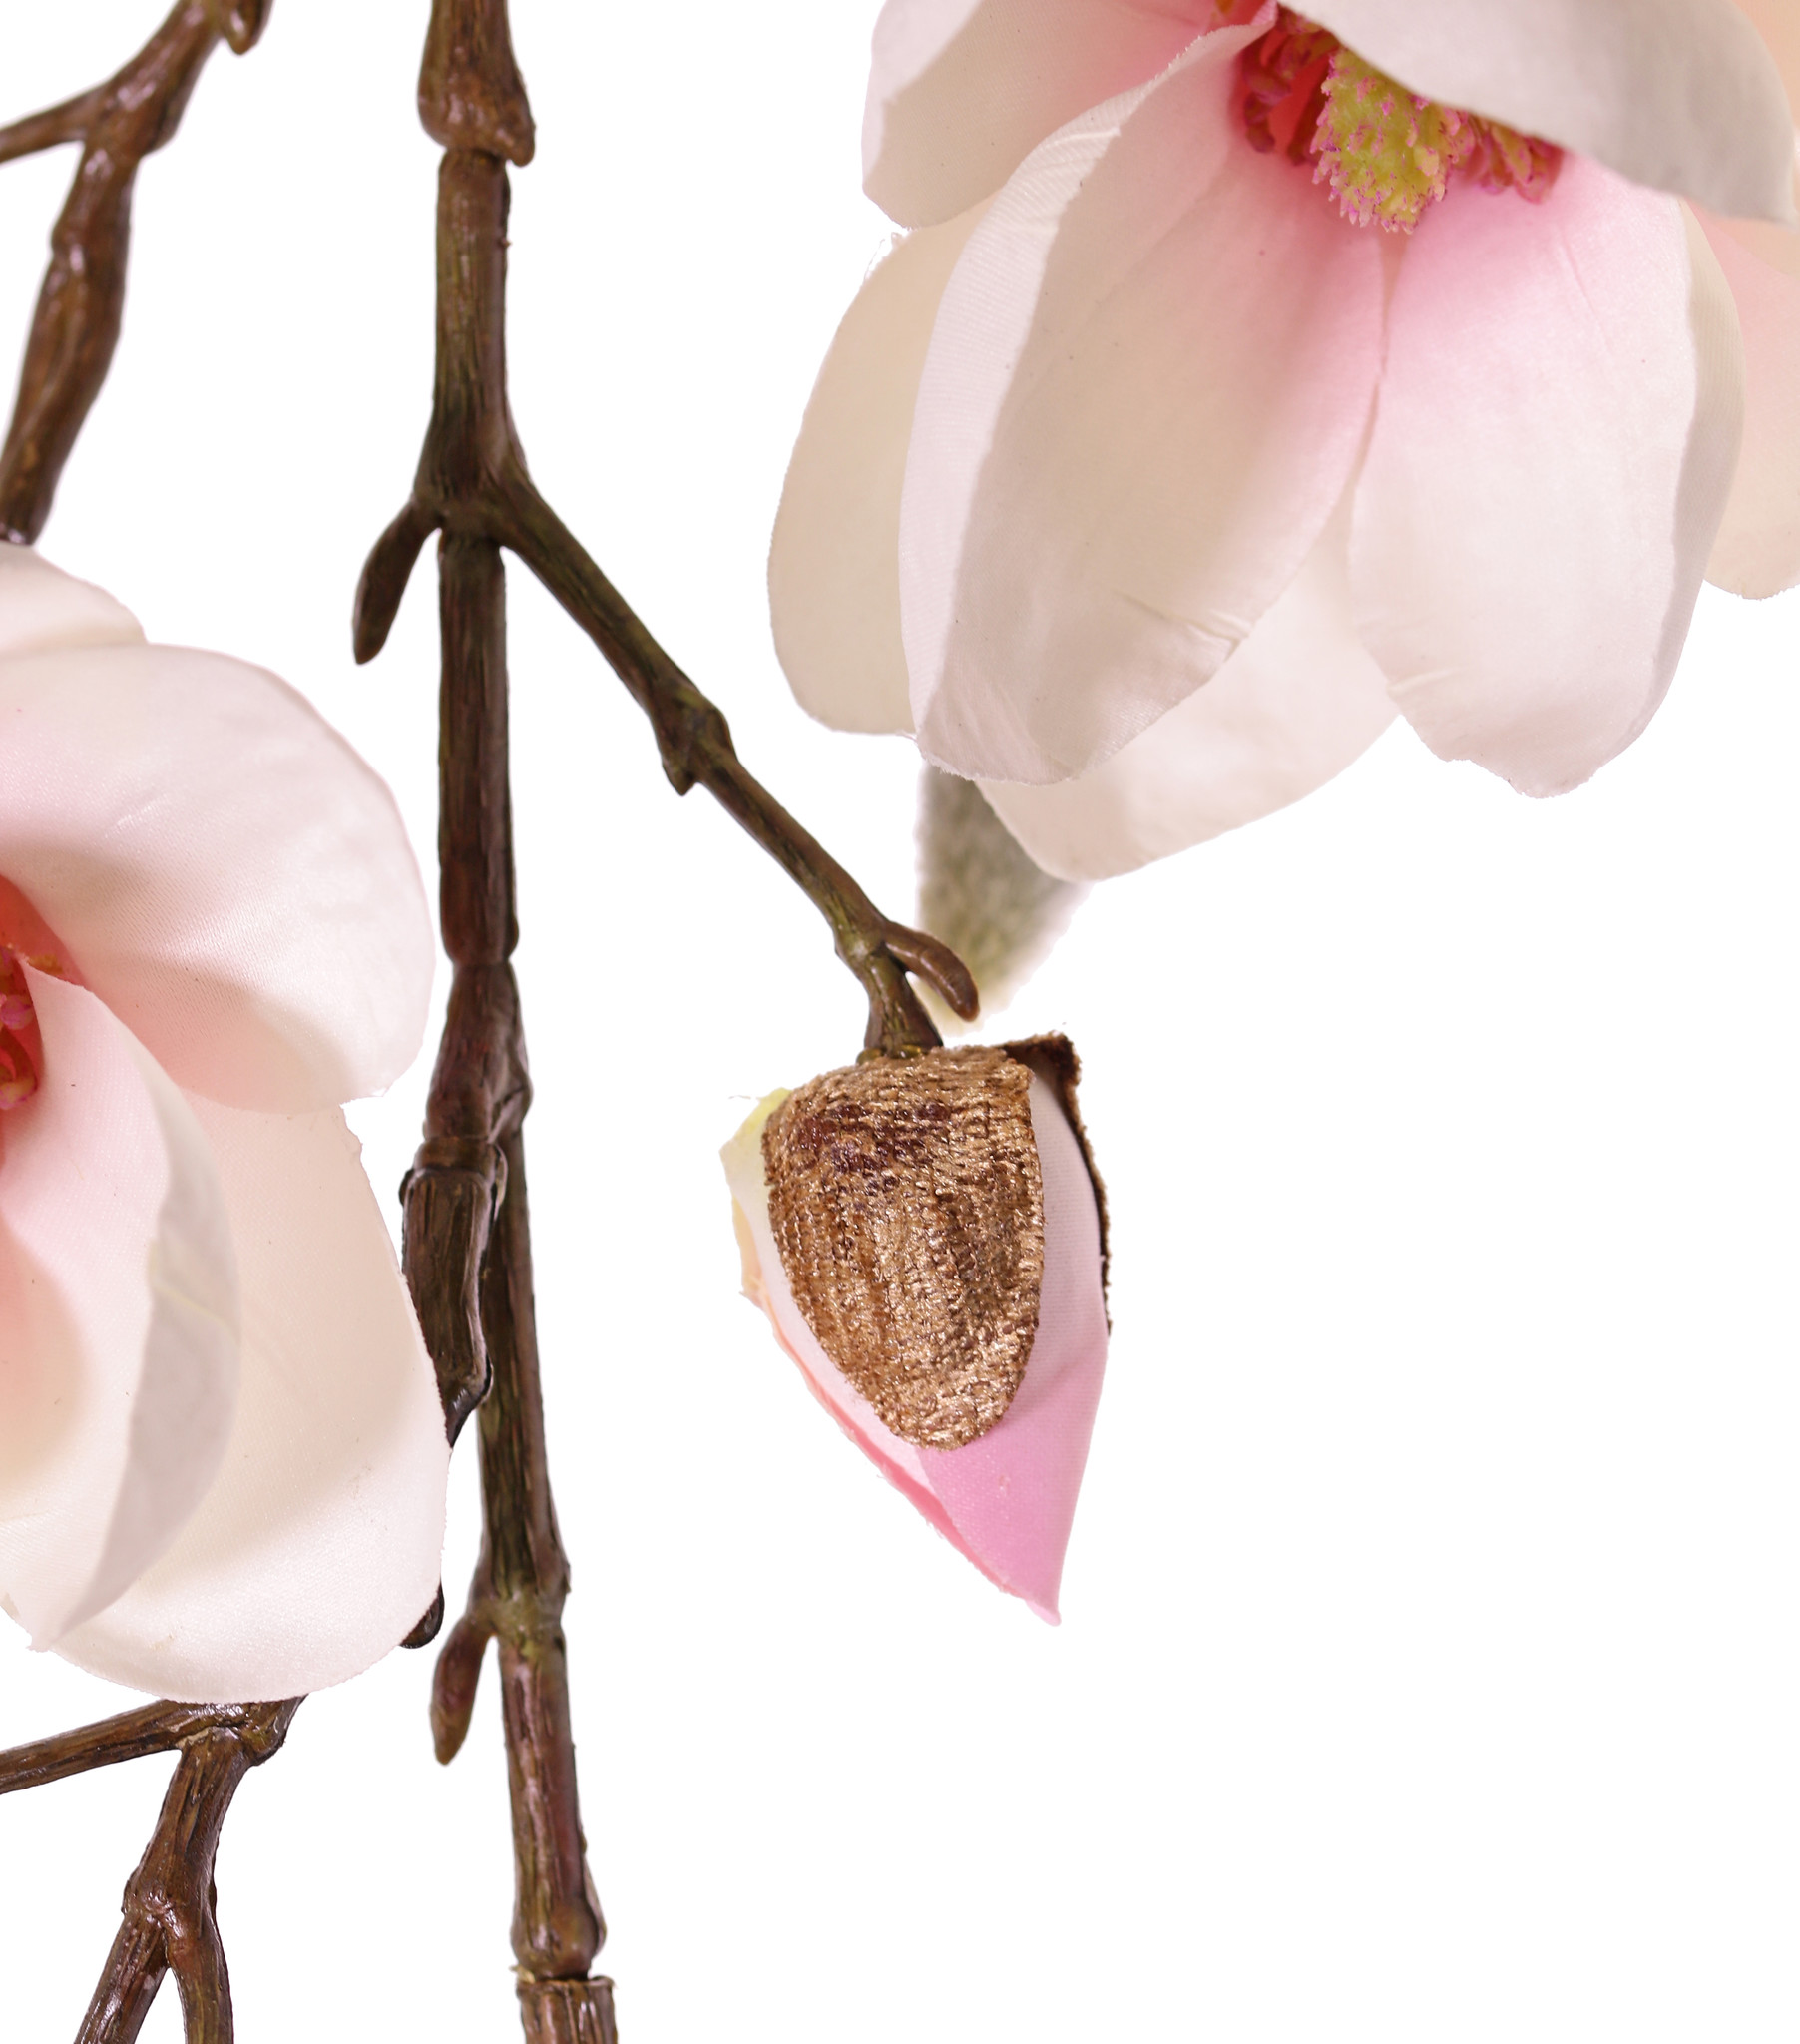 Magnolia maxi, 7 flowers, 5 big & 15 small buds, 115 cm